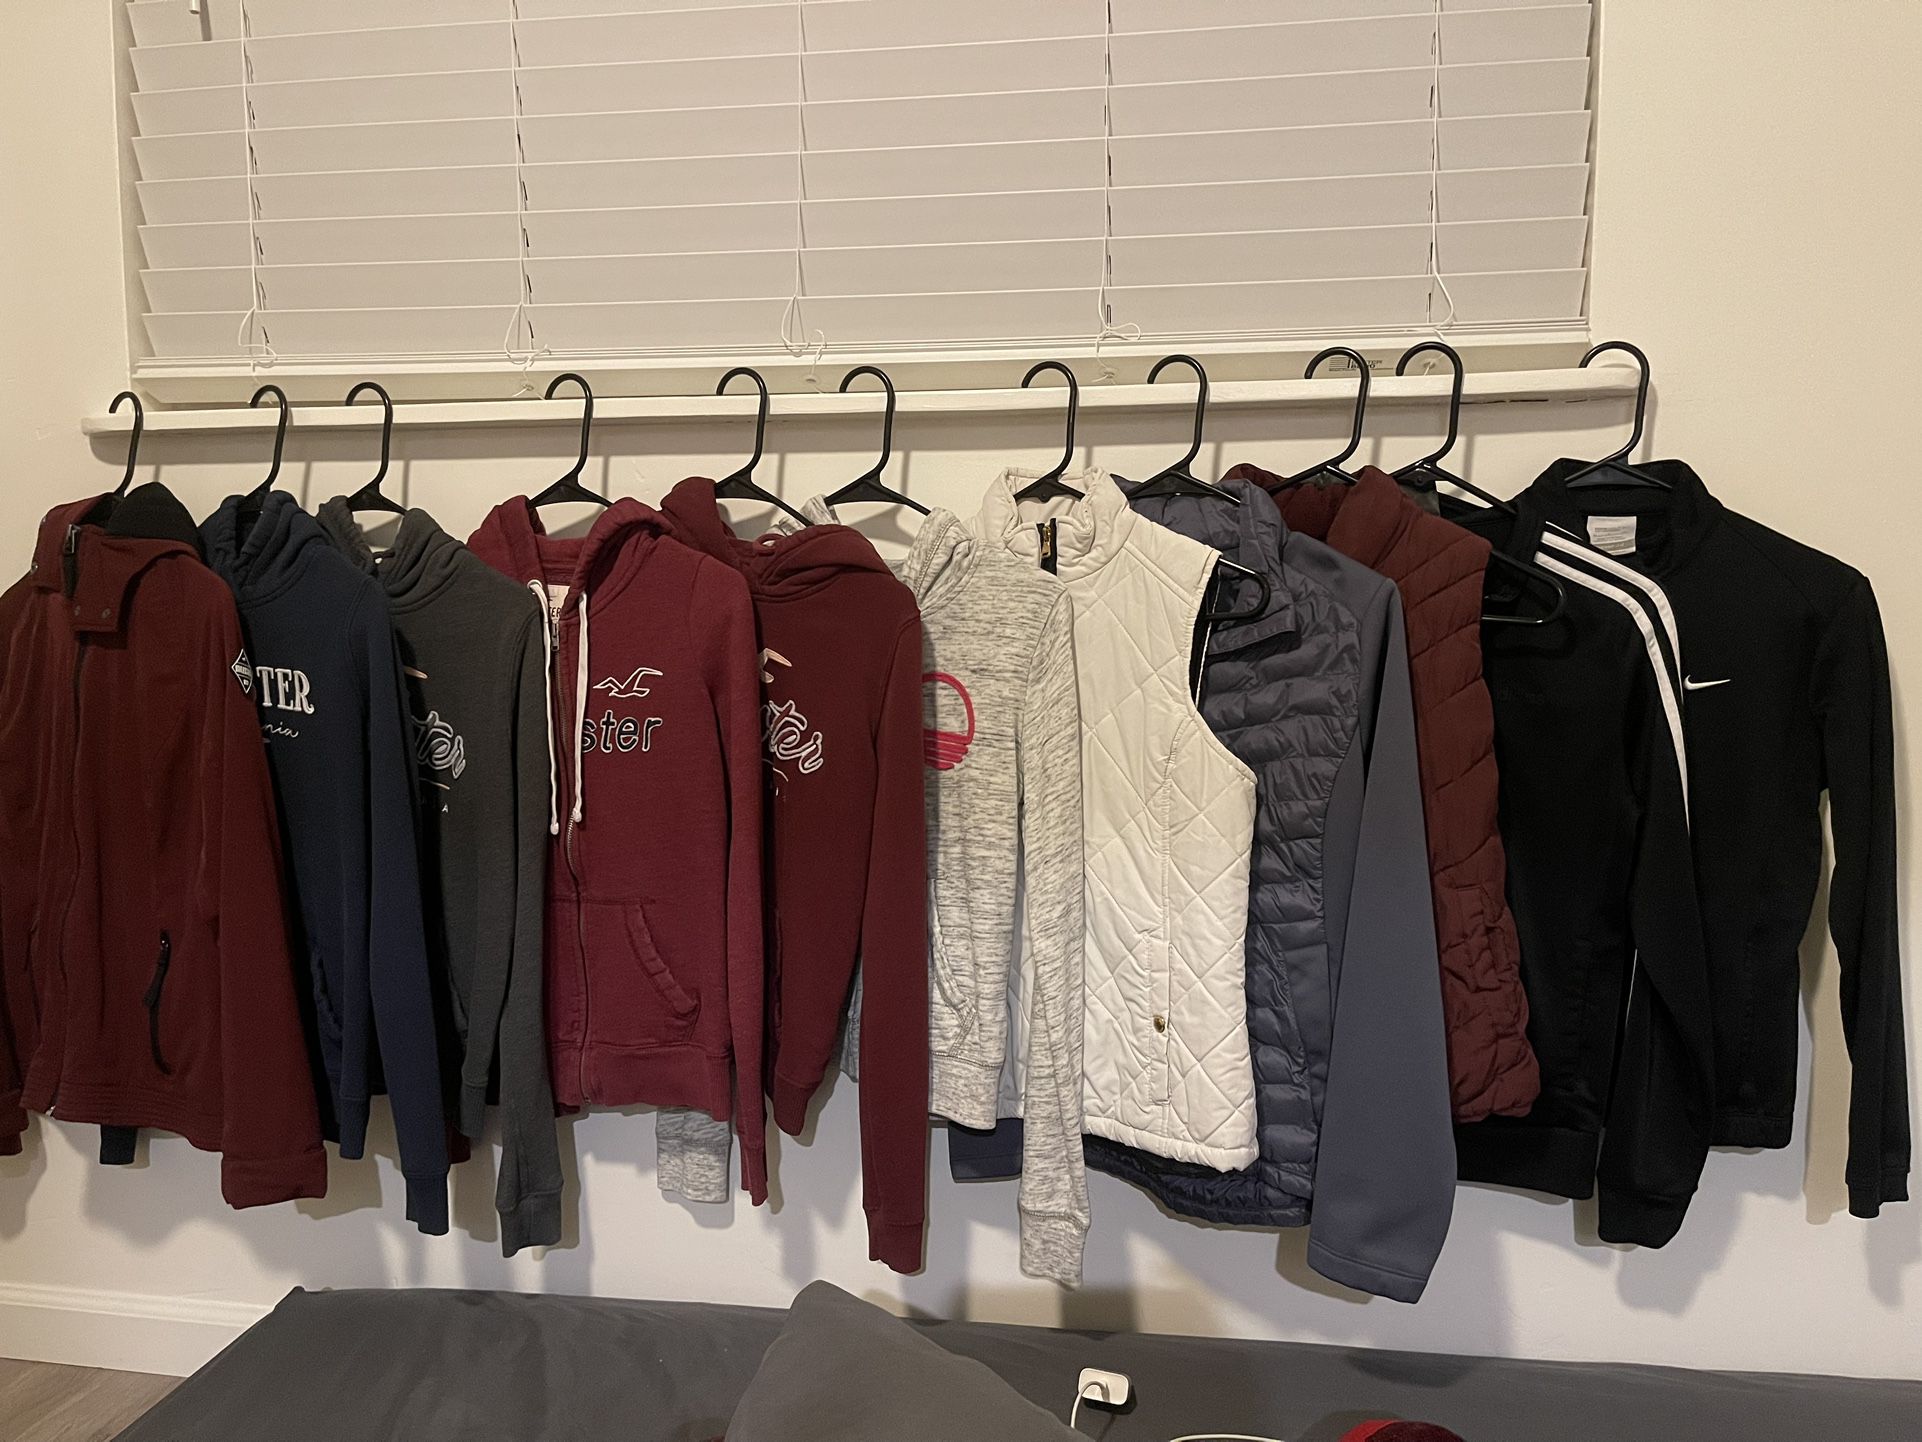 1hollister Jacket, 5 Holister Sweater,ralph lauren Vest,32 Degree Jacket, Gap Vest, Adidas Jacket And Nike Jacket